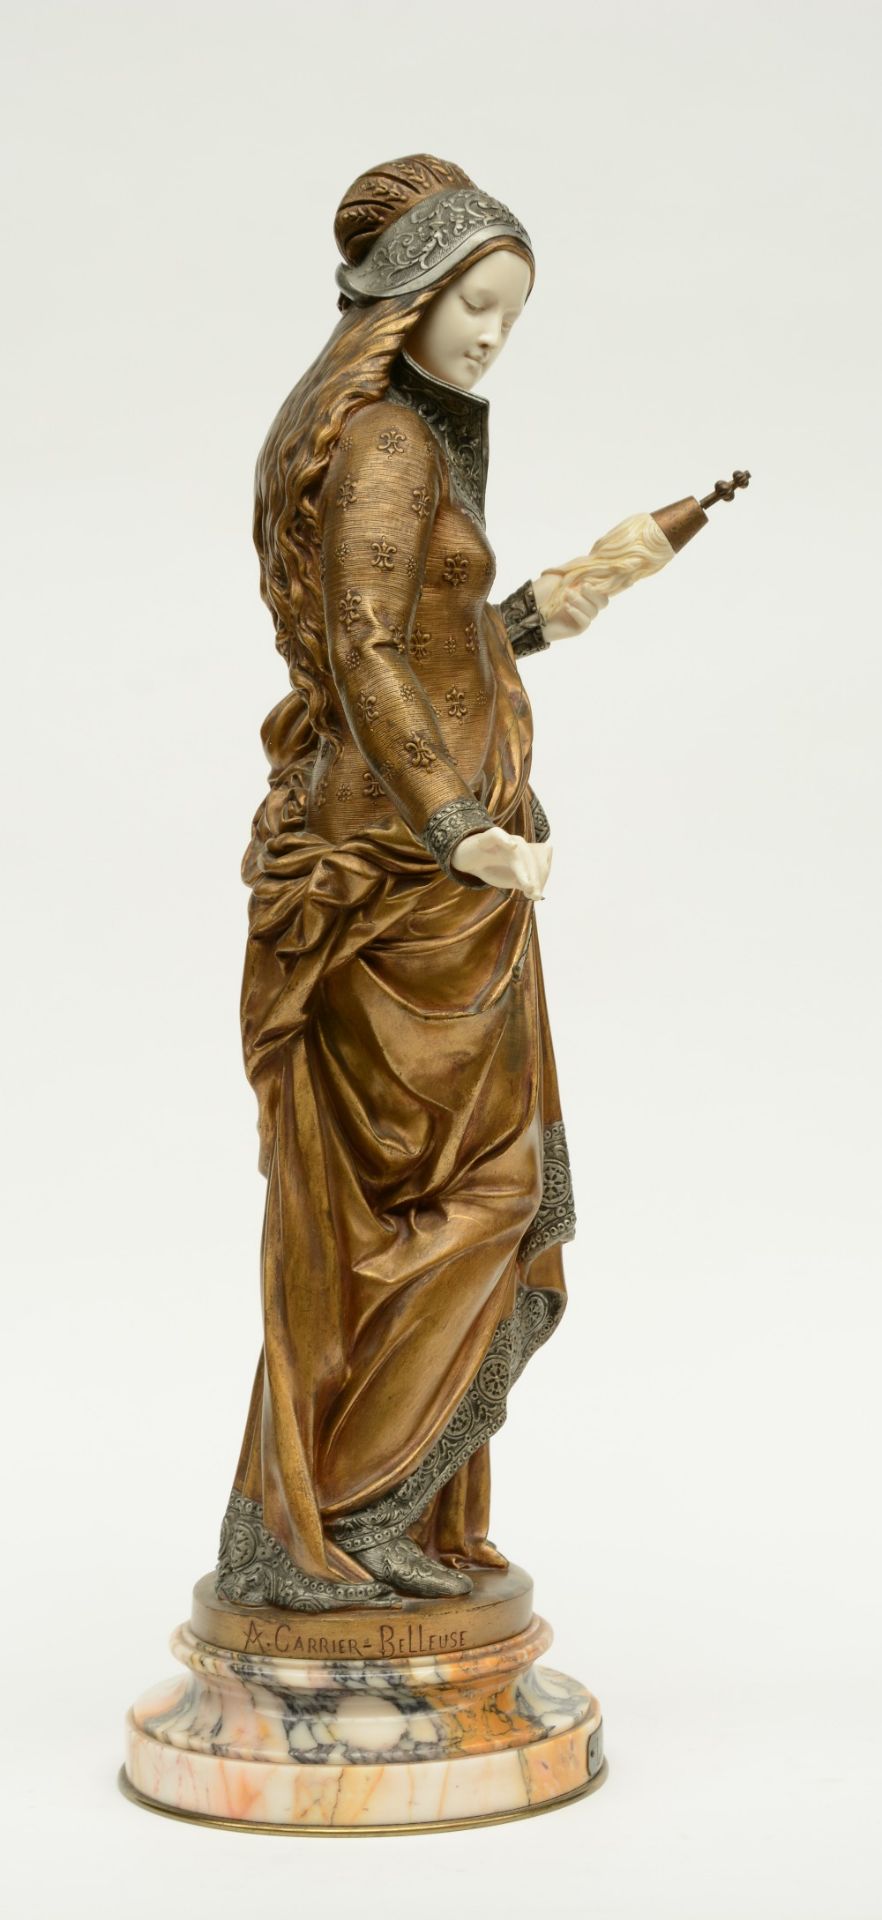 Carrier - Belleuse A., 'La Fileuse', chryselephantine statue, multiple patina, H 75,5 cm - Image 4 of 15